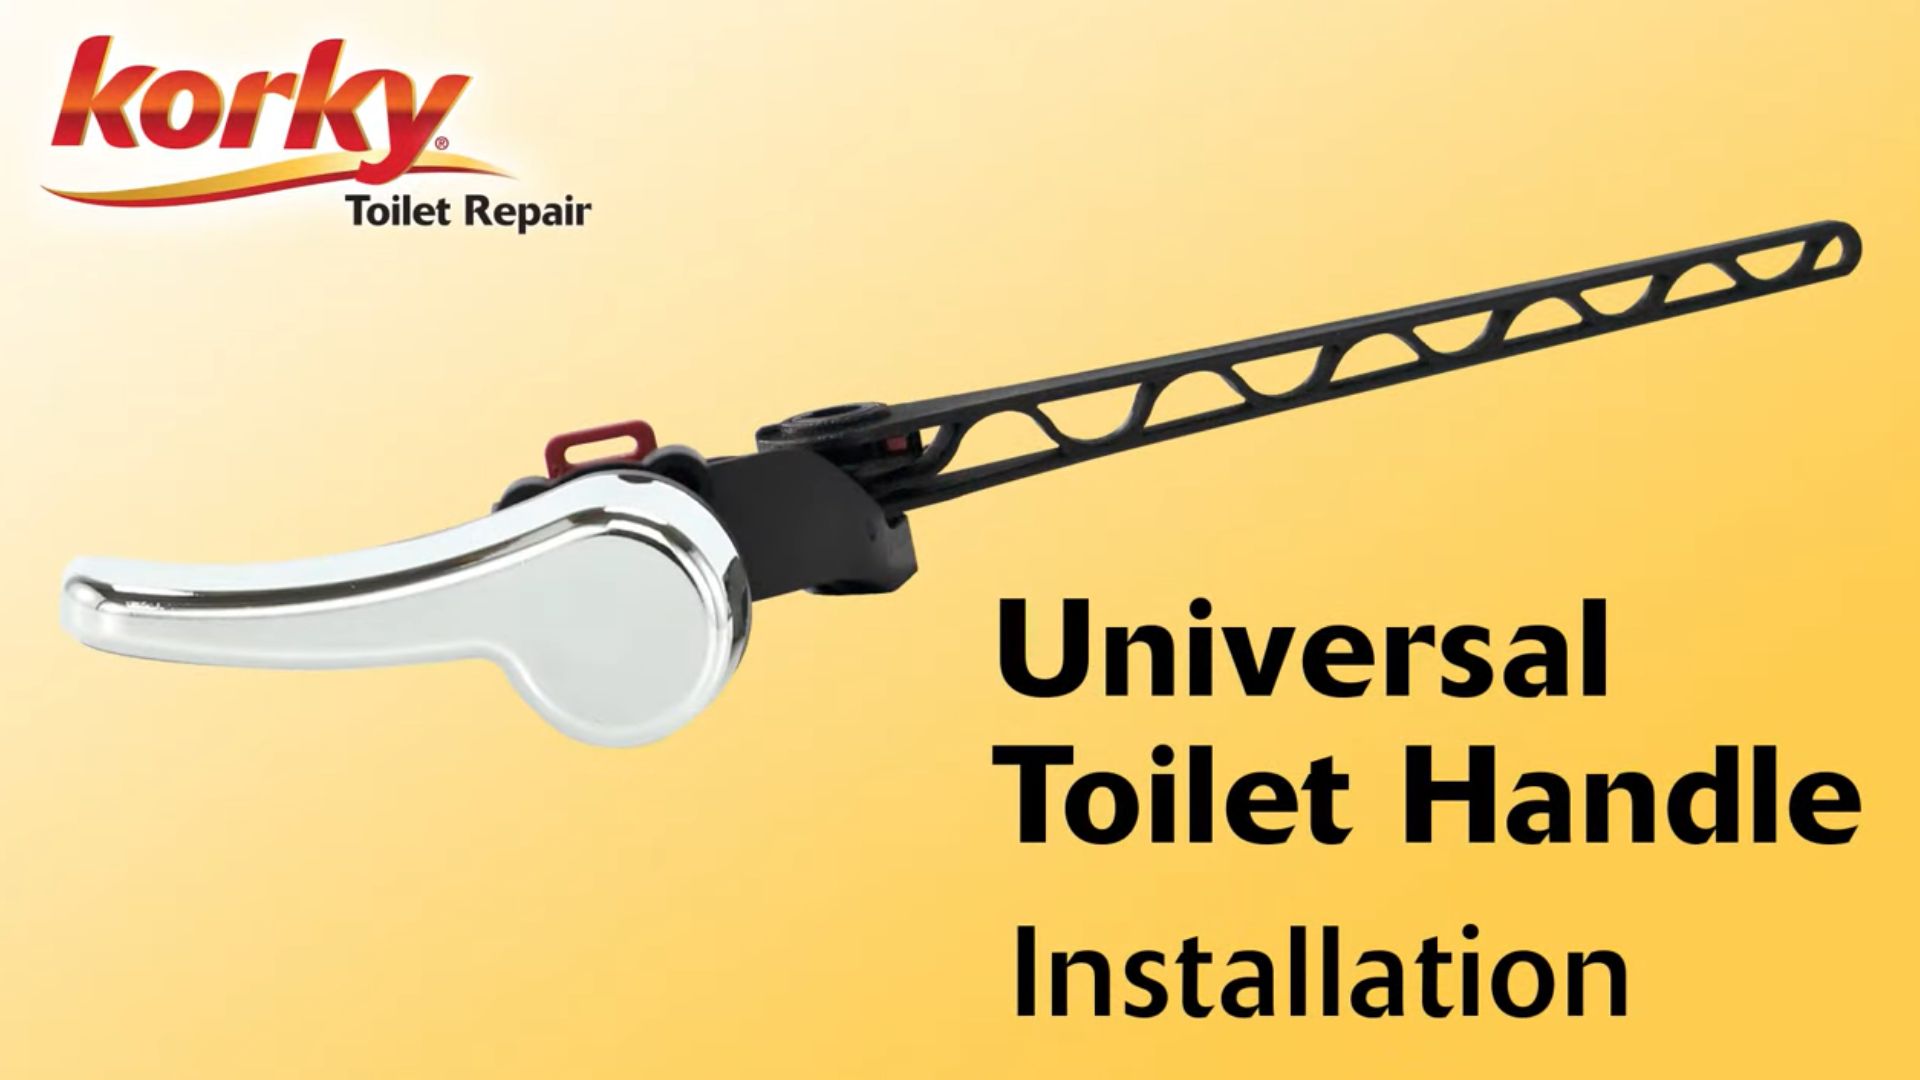 Universal toilet handle installation video